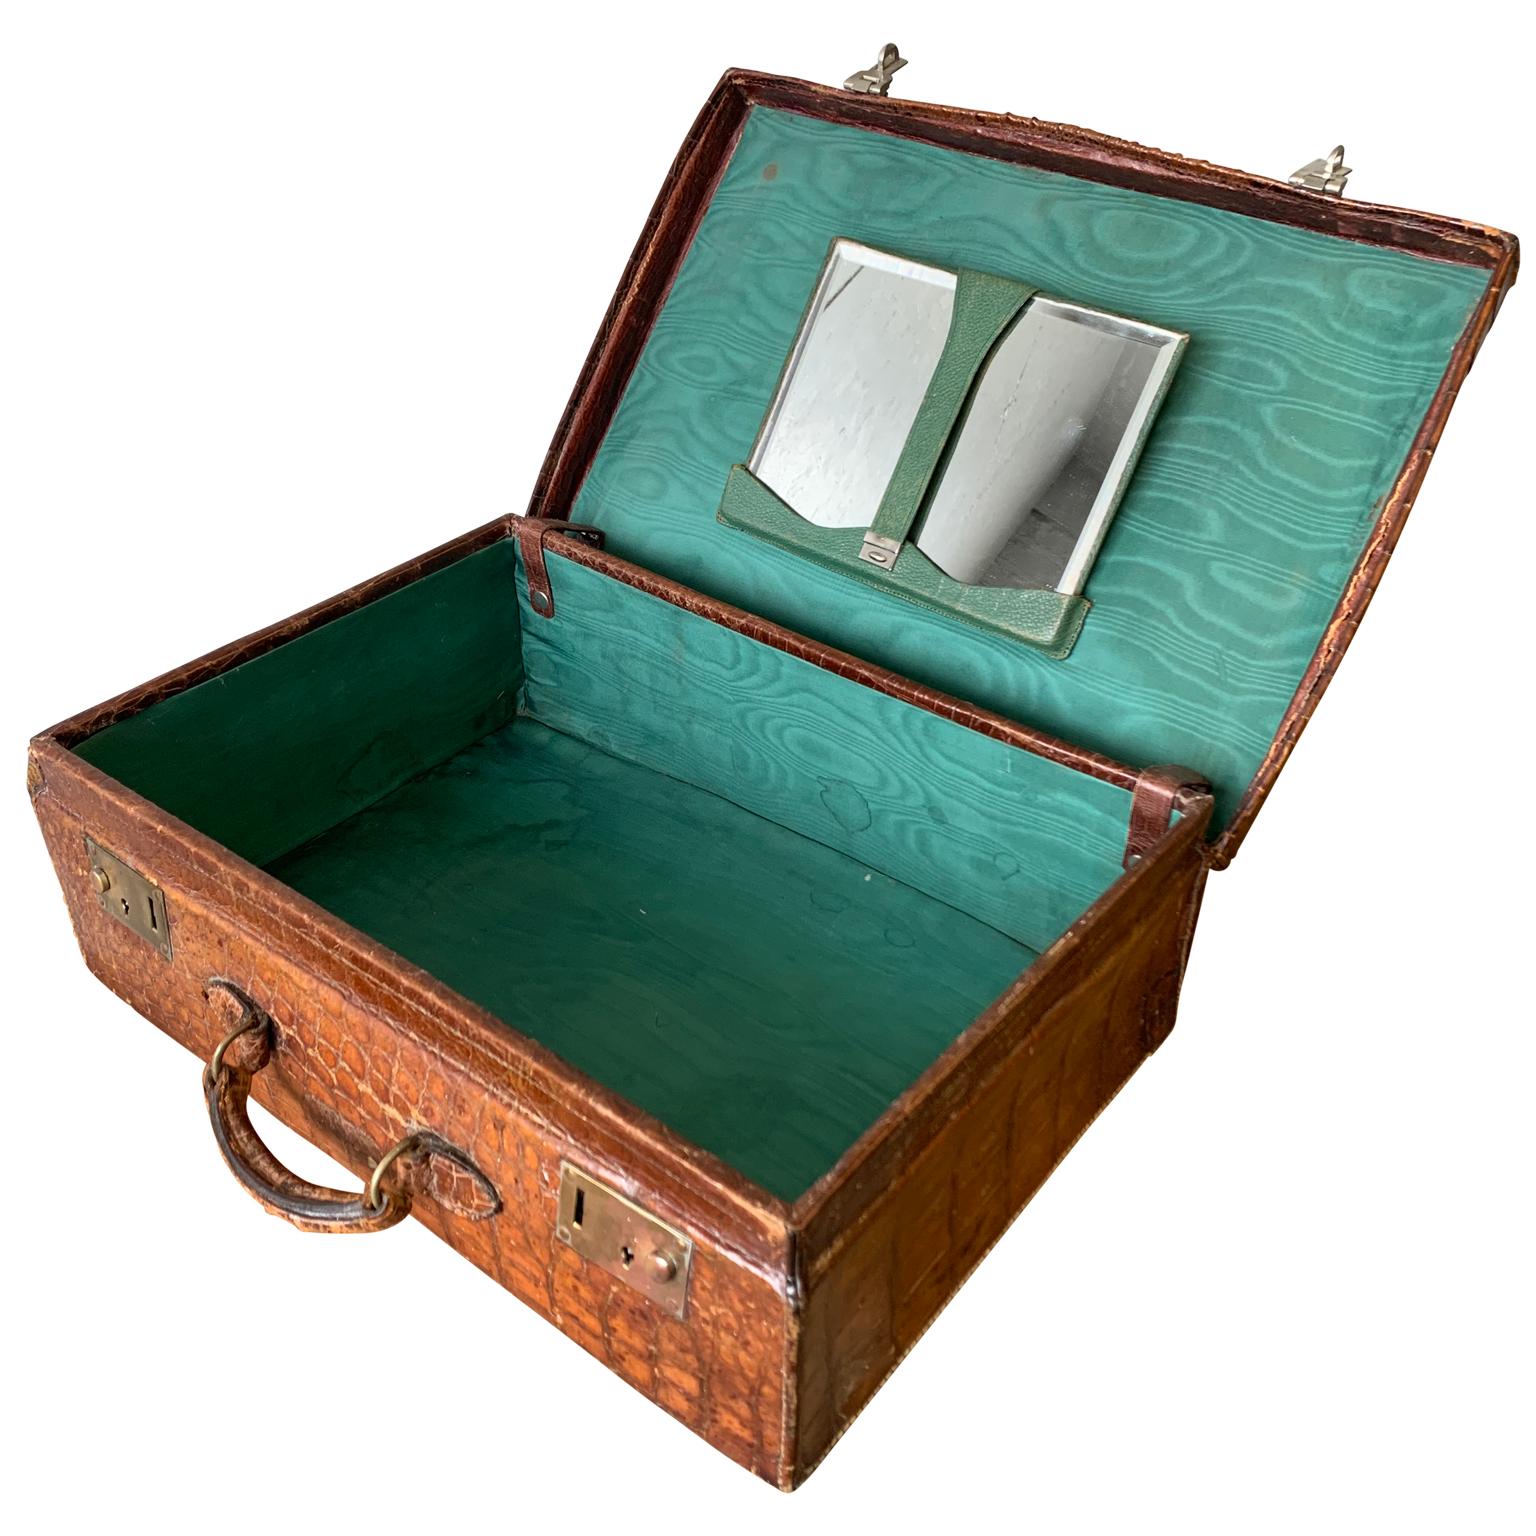 Vintage English Edwardian crocodile suitcase with bevelled vanity mirror.